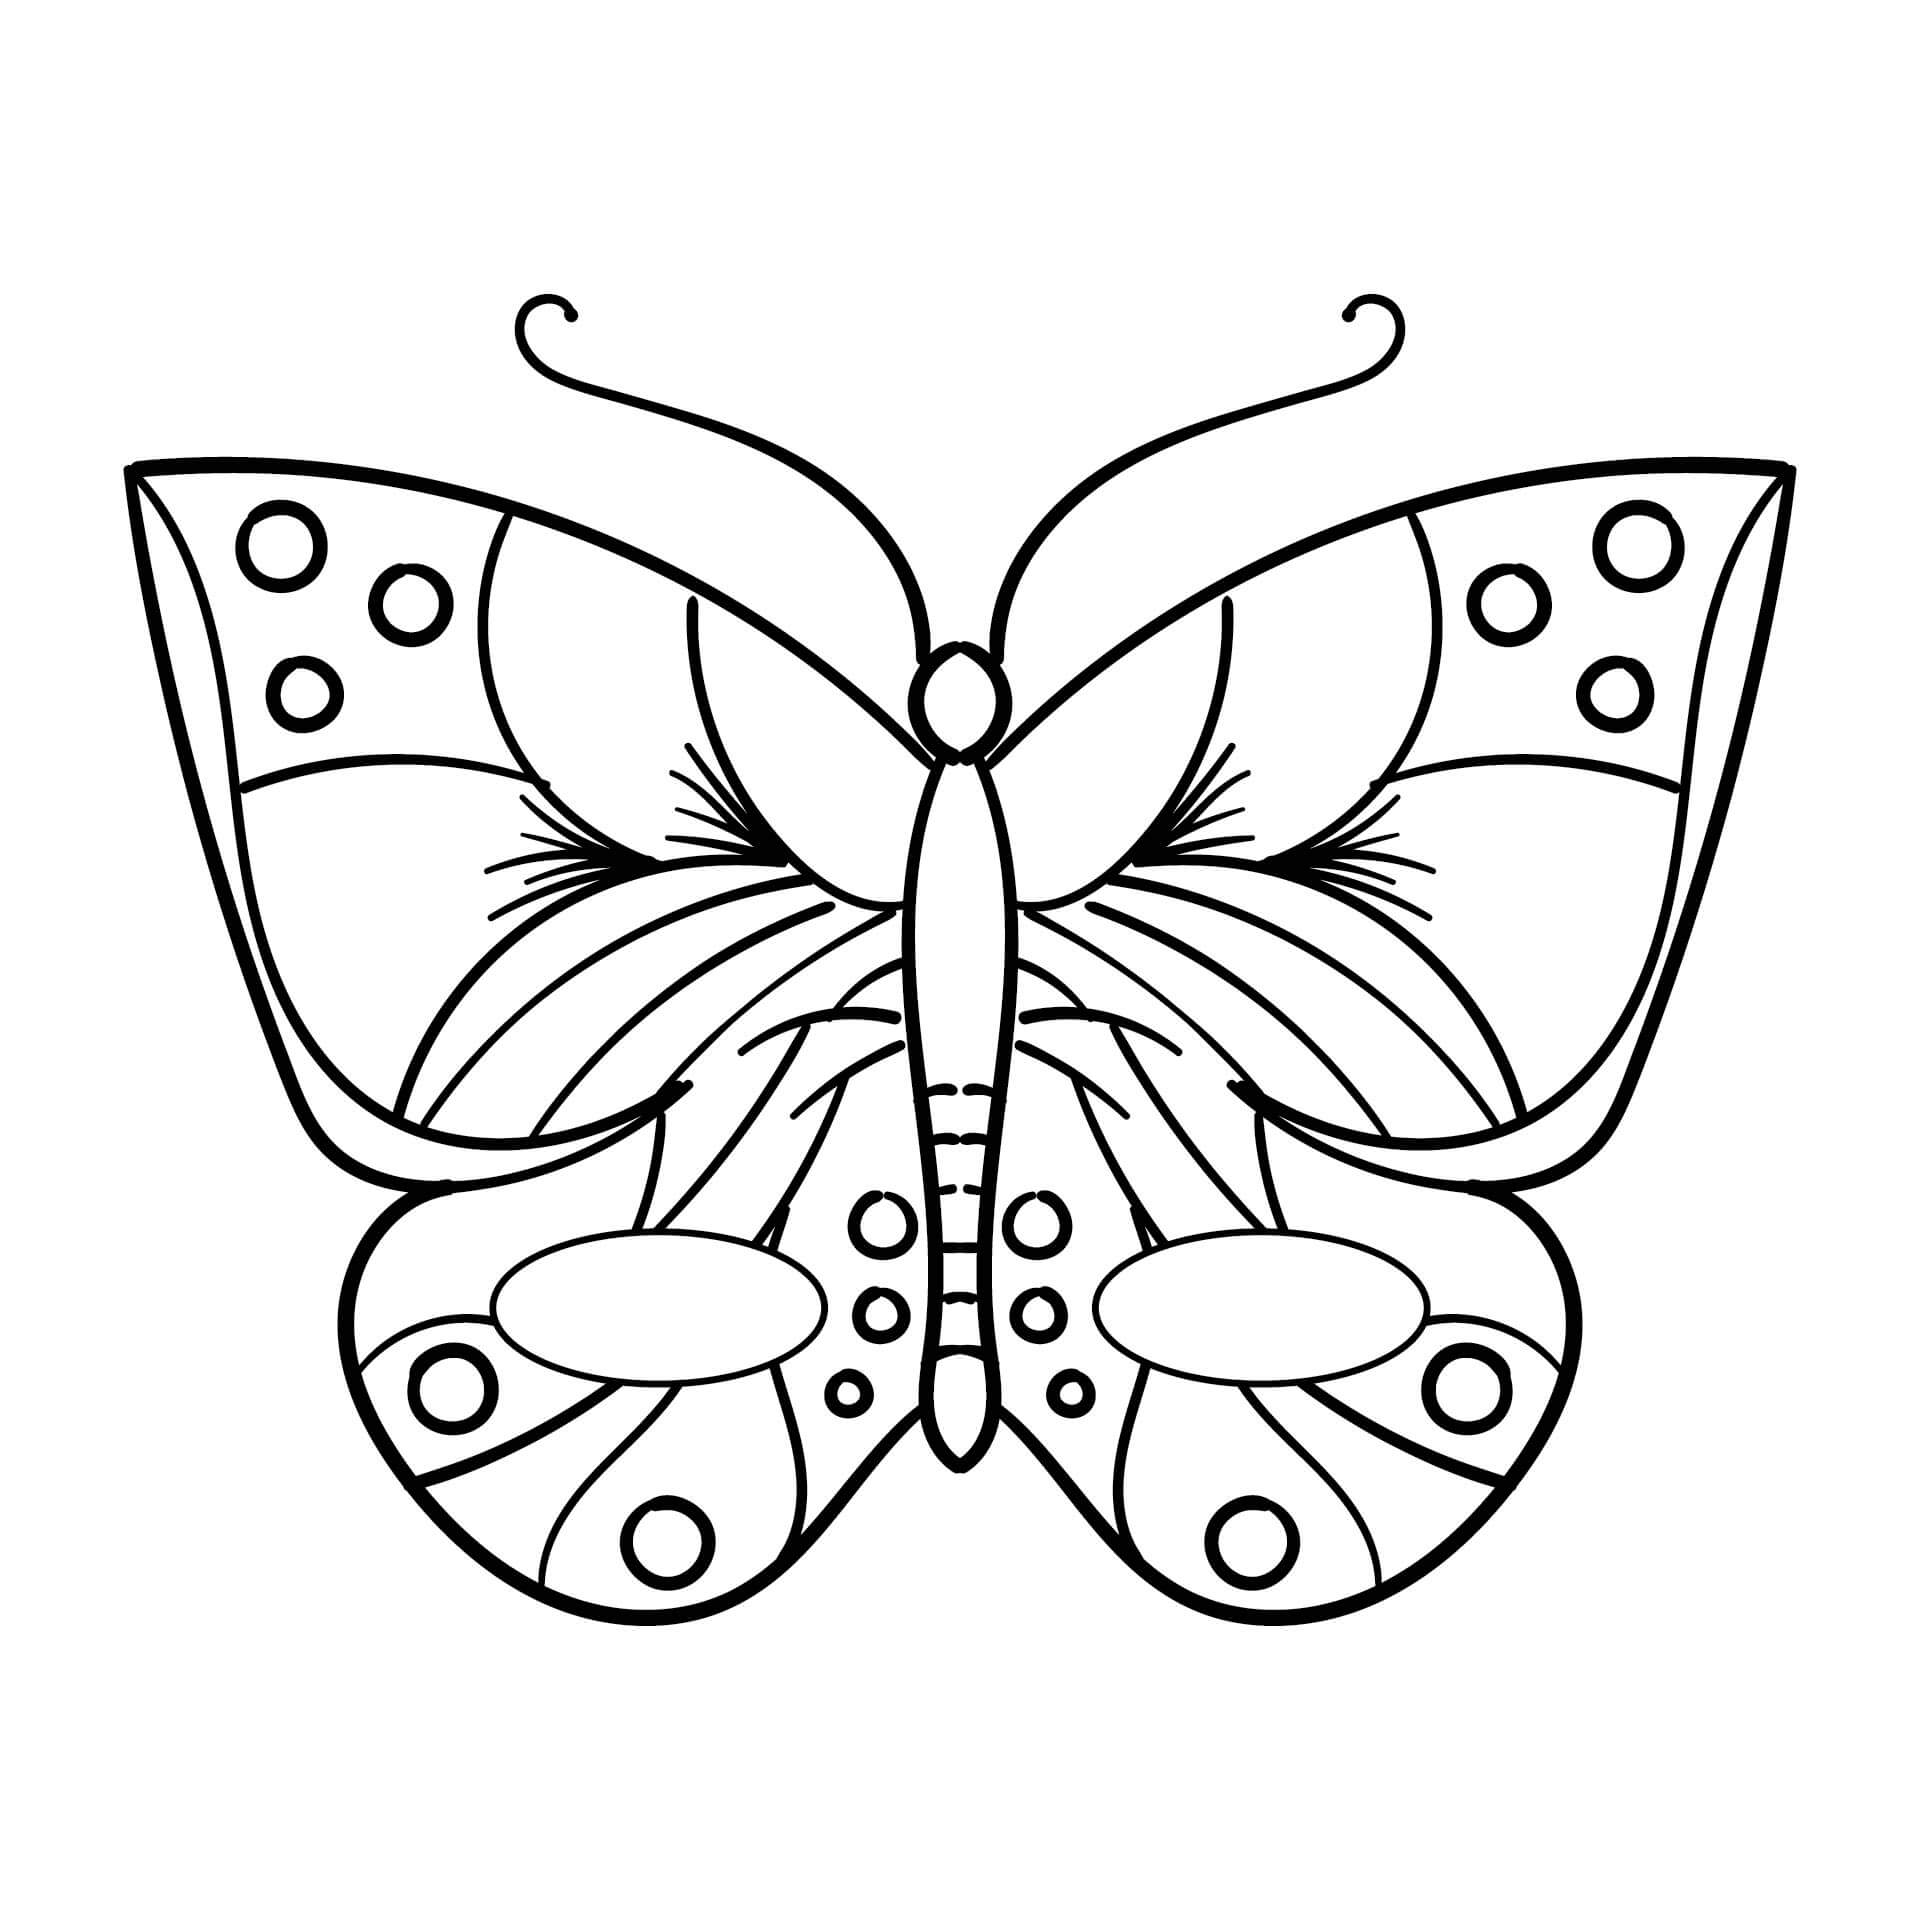 Masque Papillon coloring page